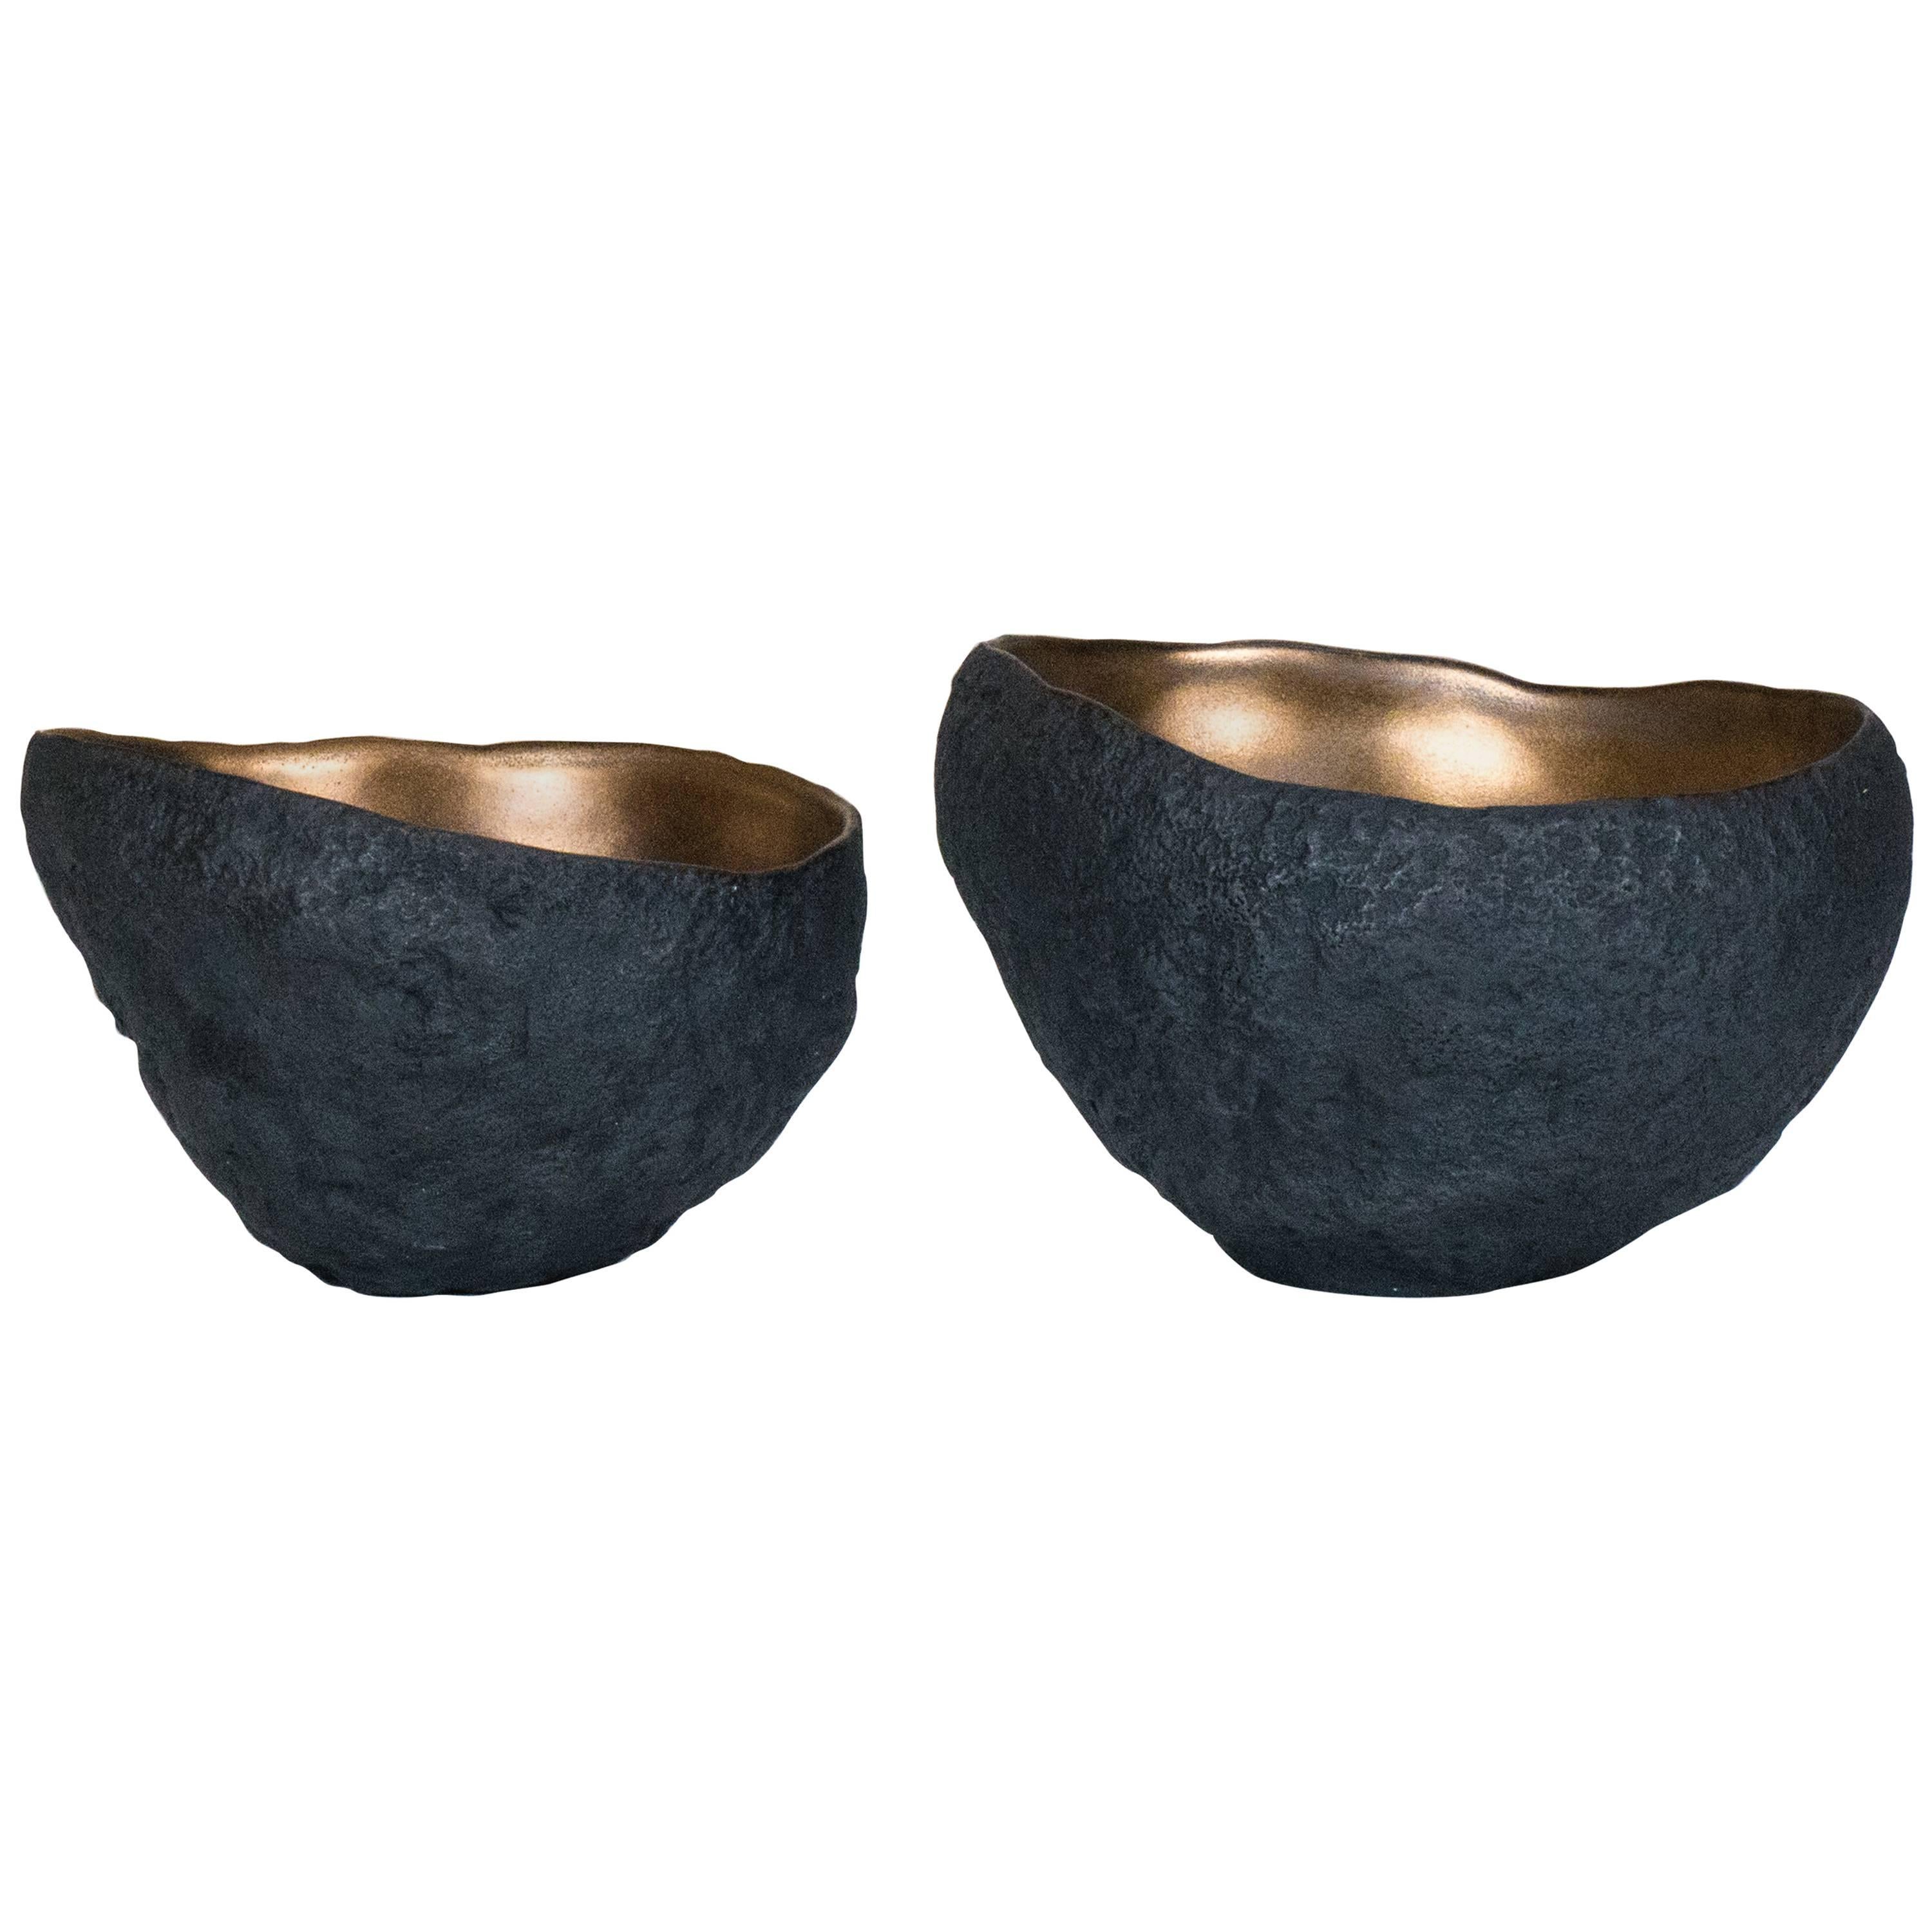 Two Small Ceramic Bowls by Cristina Salusti